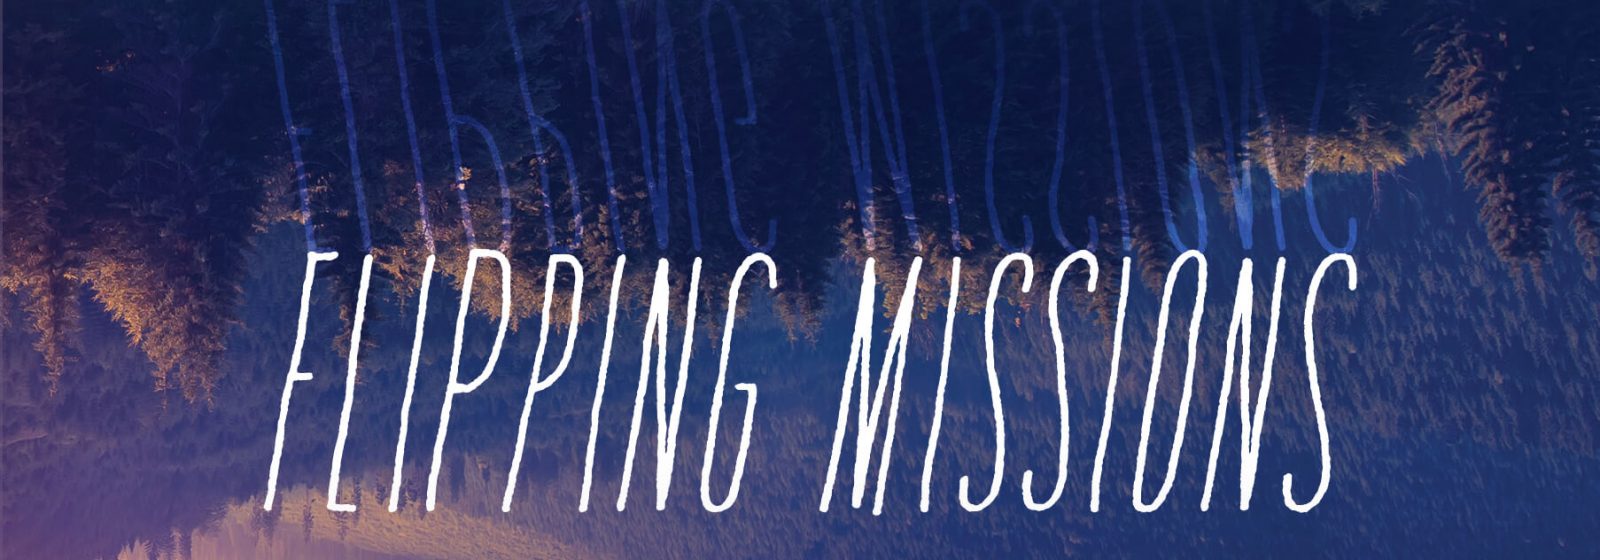 flipping missions mission trip devotional blog